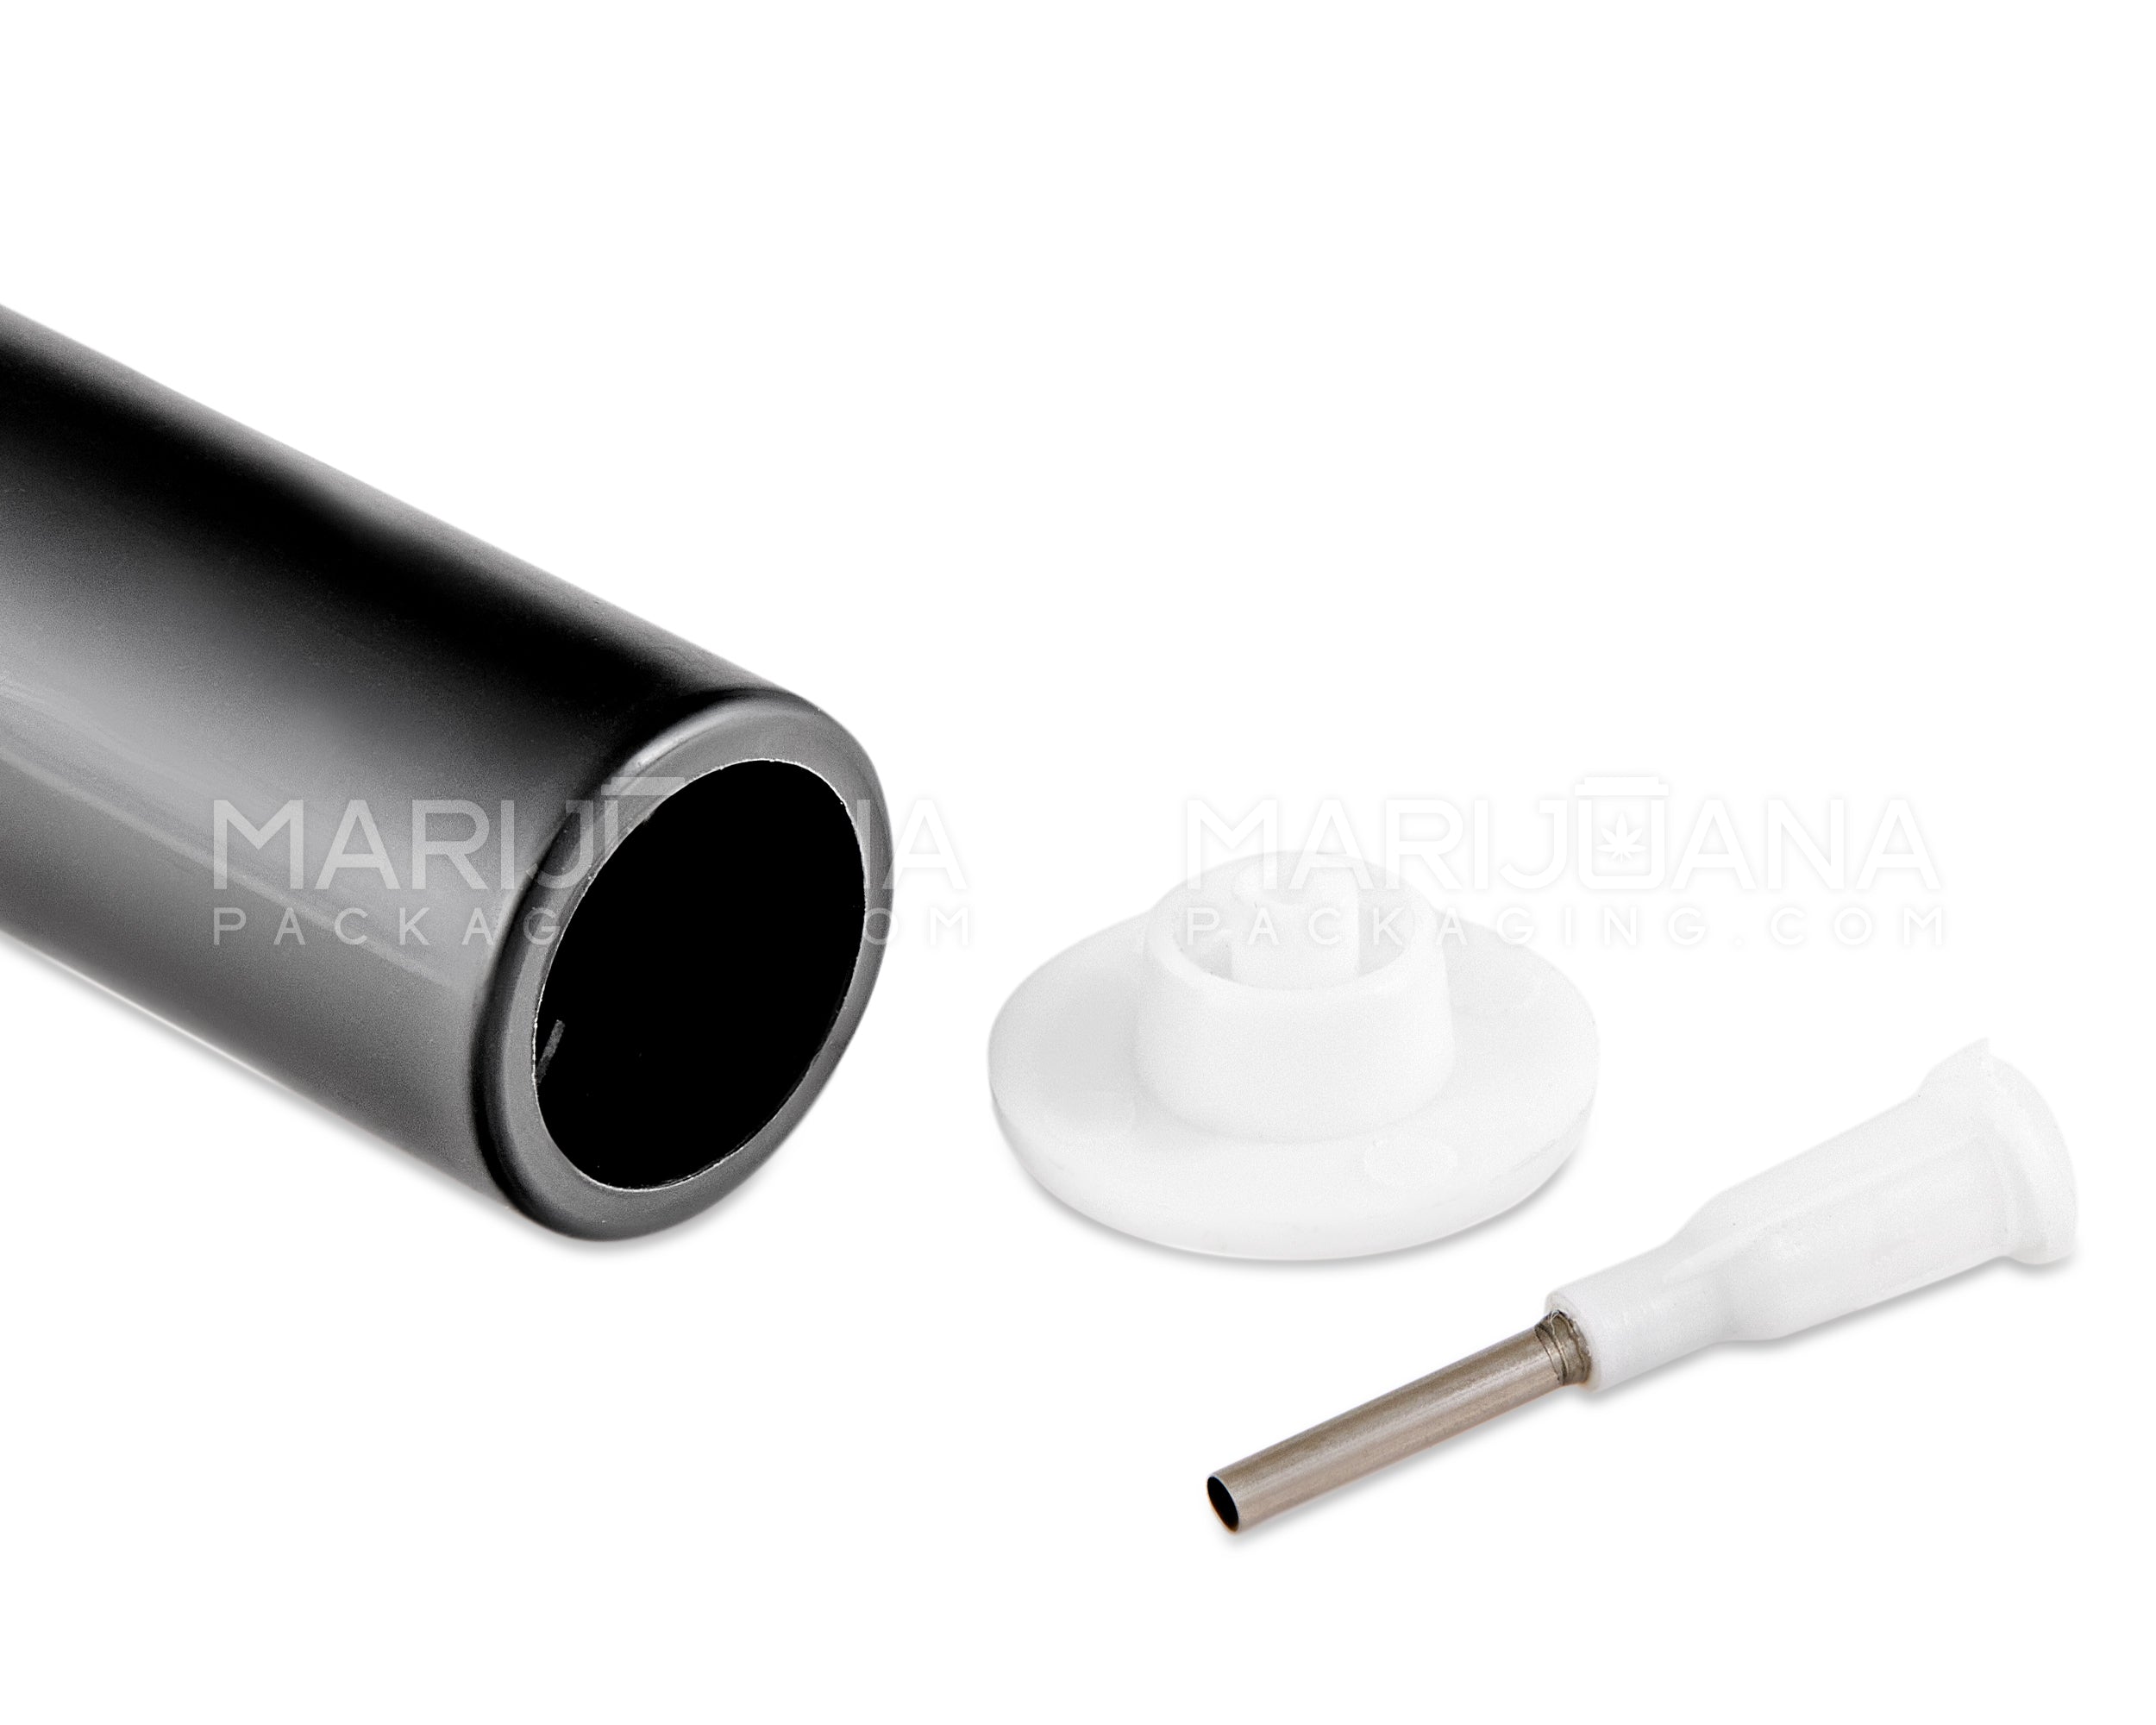 Child Resistant & Luer Lock | DymaPak Twistspenser Black Plastic Dab Applicator Syringes | 1mL - 0.33mL Increments - 8